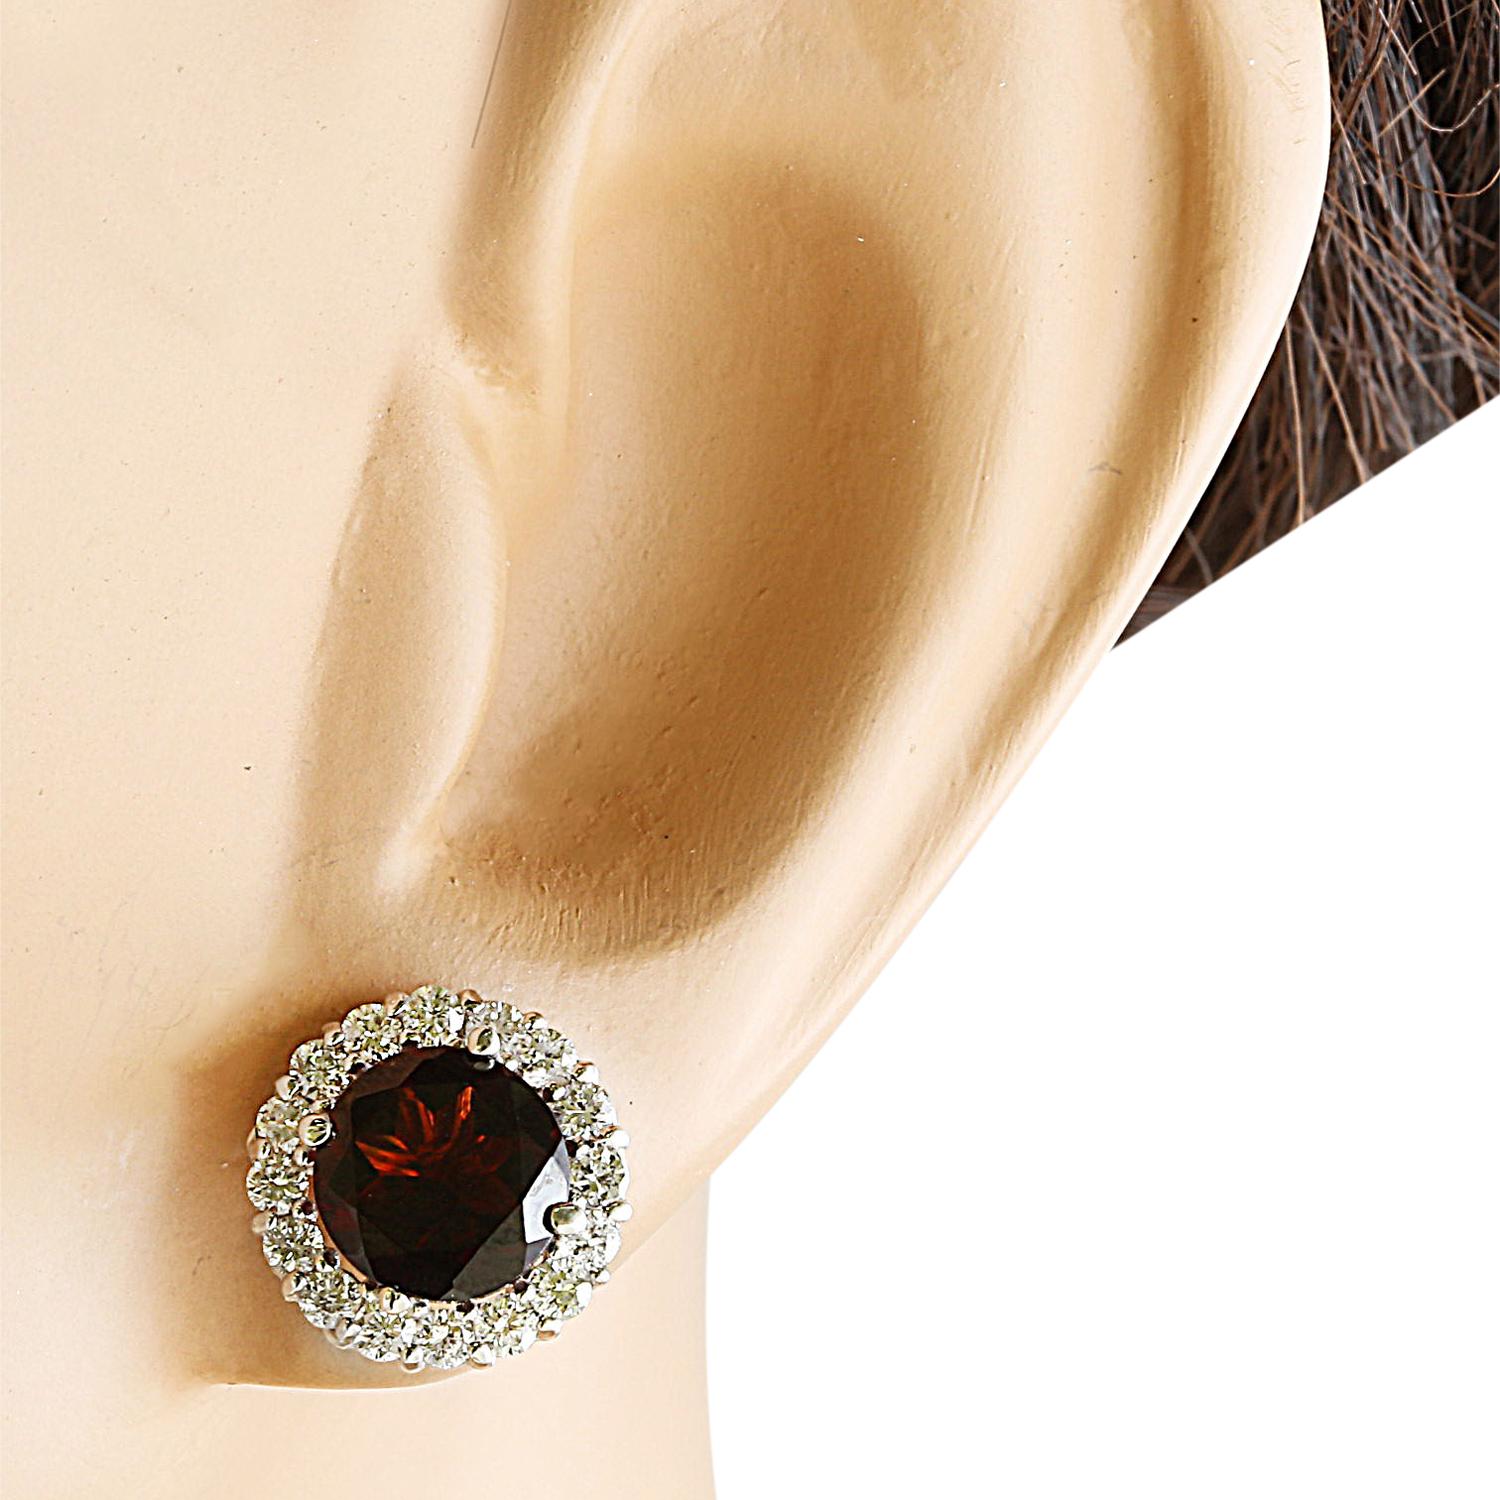 3.65 Carat Natural Garnet 14 Karat Solid White Gold Diamond Earrings
Stamped: 14K 
Total Earrings Weight: 1.5 Grams 
Garnet Weight: 3.00 Carat (7.00x7.00 Millimeters)  
Quantity: 2
Diamond Weight: 0.65 Carat (F-G Color, VS2-SI1 Clarity )
Quantity: